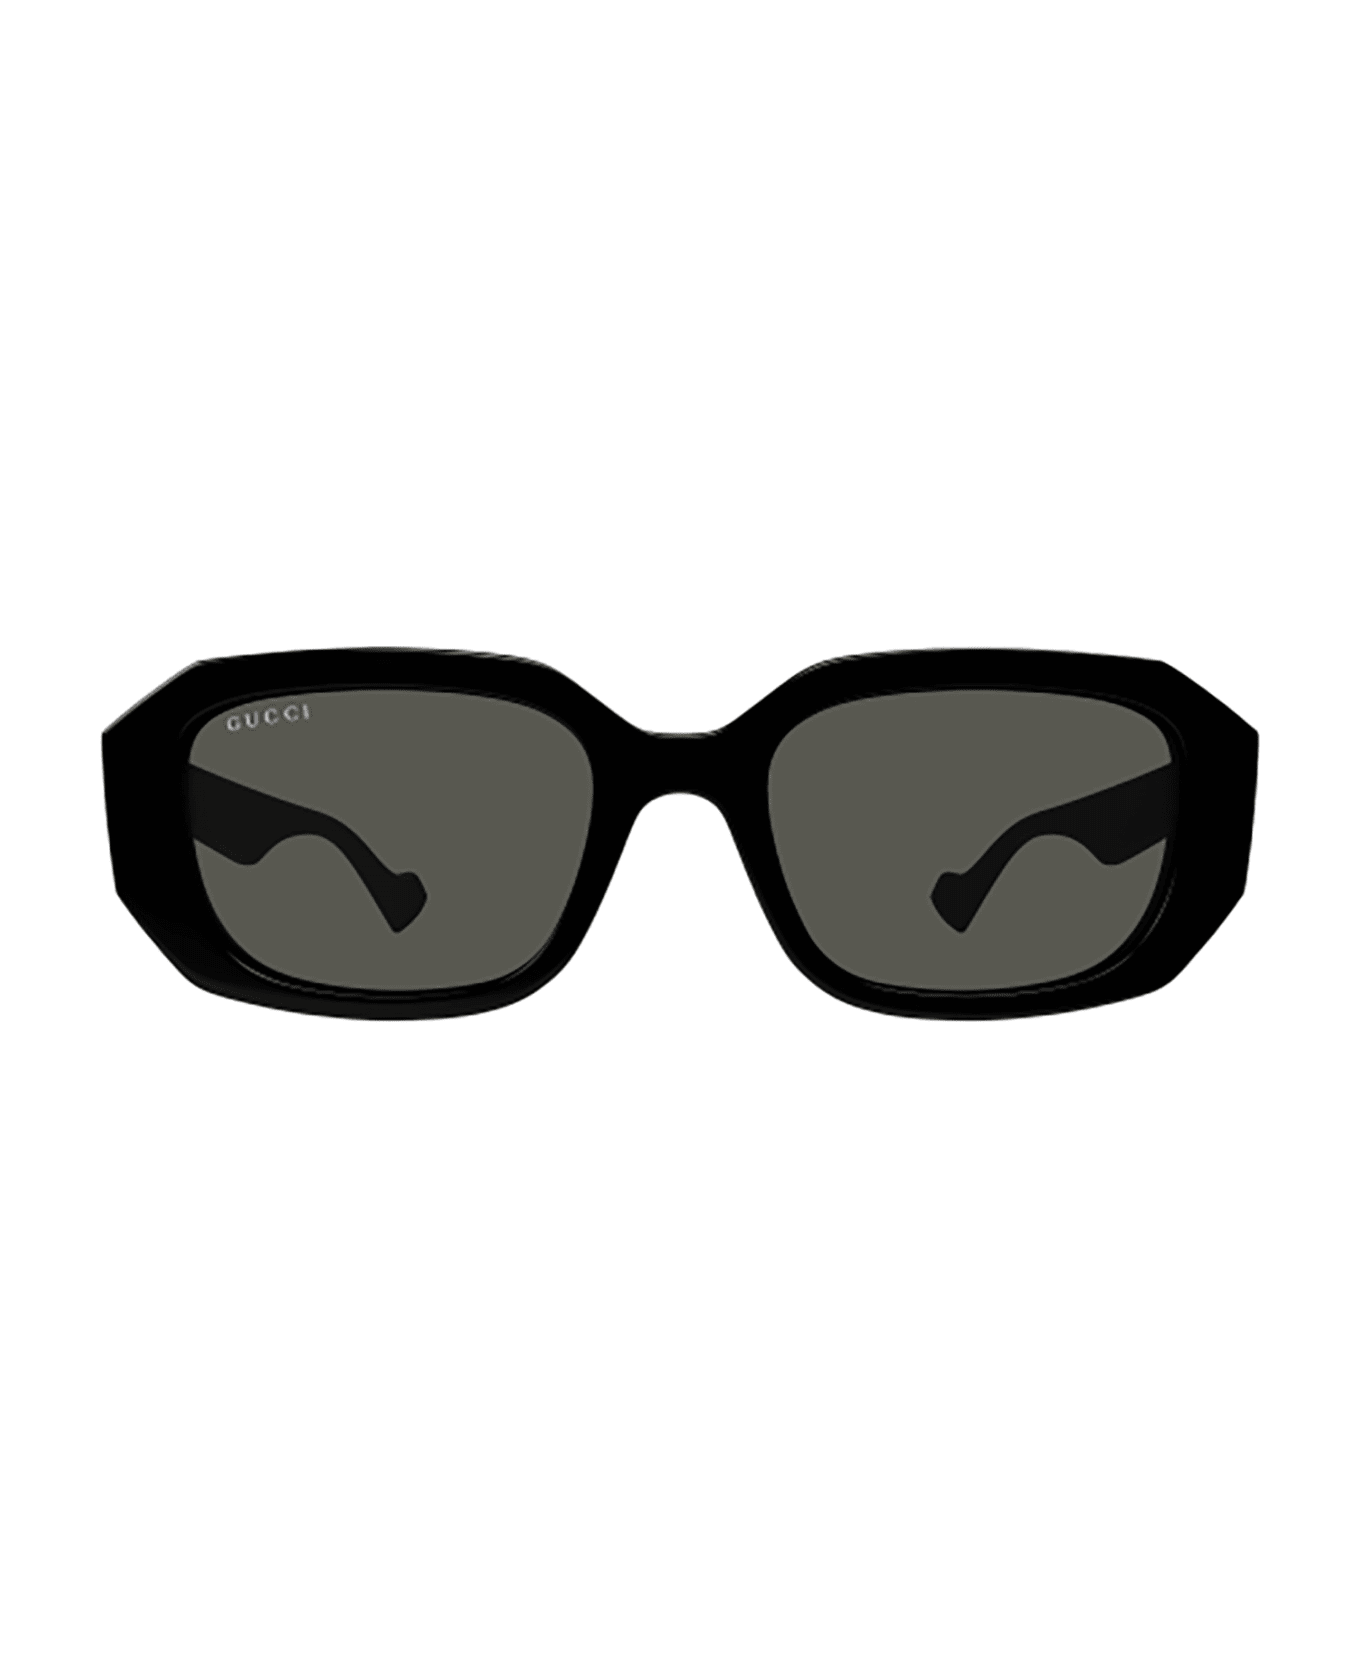 Gucci Eyewear GG1535S Sunglasses - Black Black Grey